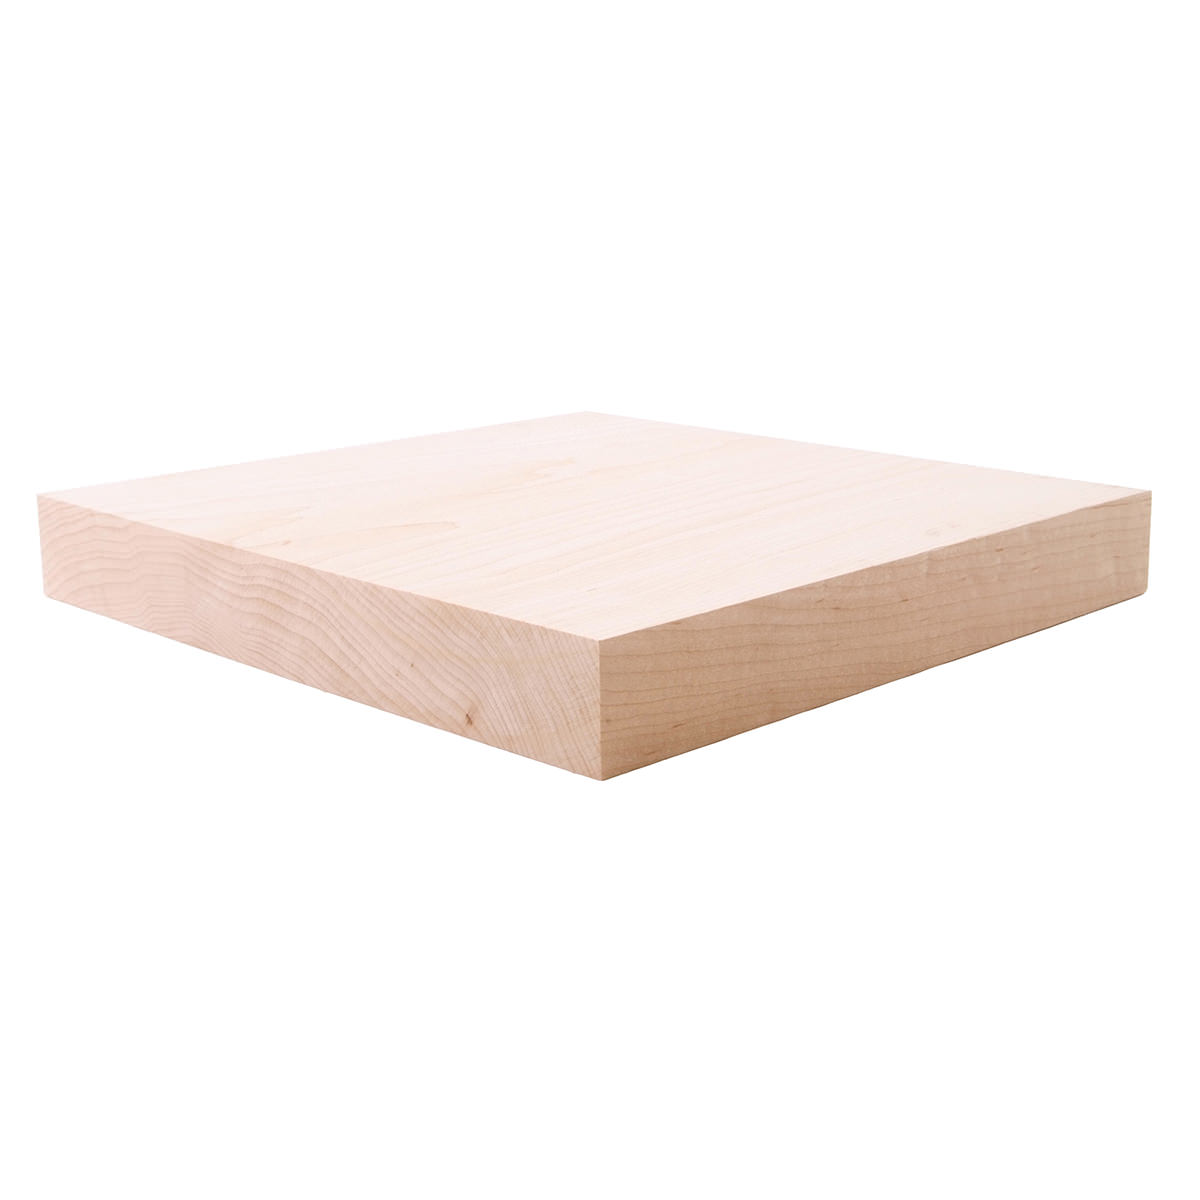 2 Maple Boards 1-1/2" x 11-1/2" Hard Maple Lumber 2x12